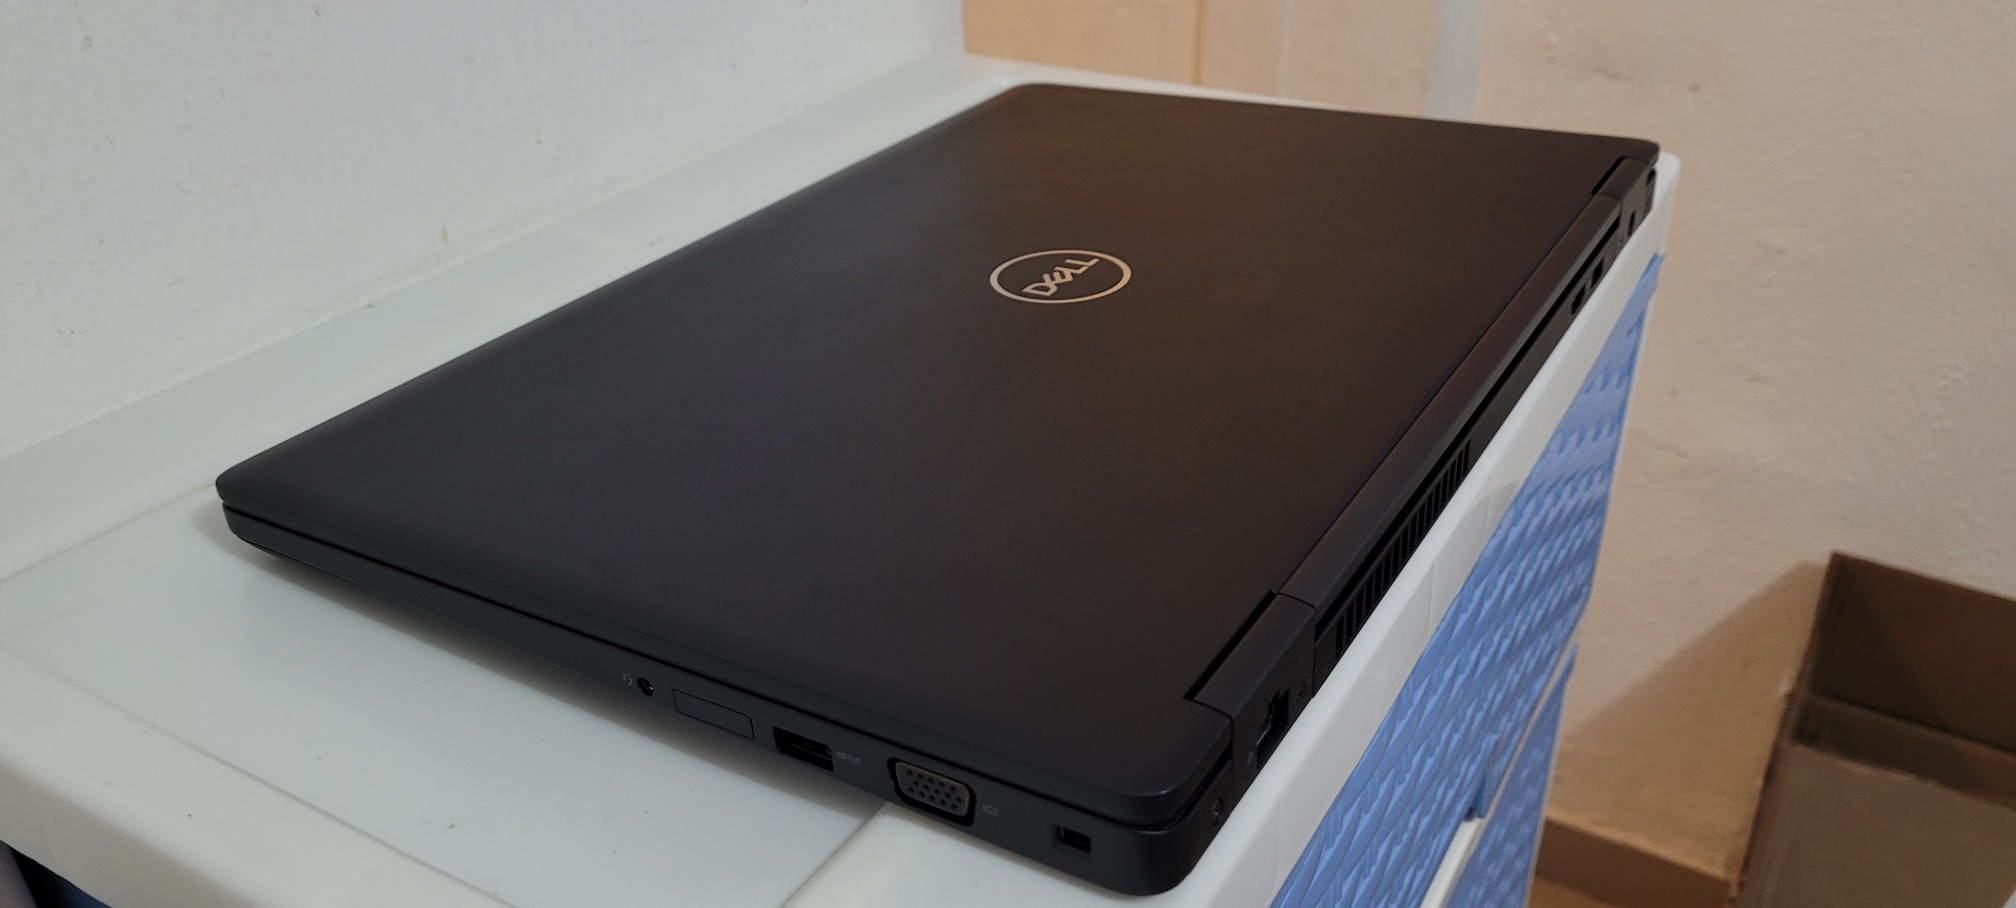 computadoras y laptops - Dell 5570 17 Pulg Core i5 6ta Gen Ram 8gb ddr4 Disco 256gb SSD New 2